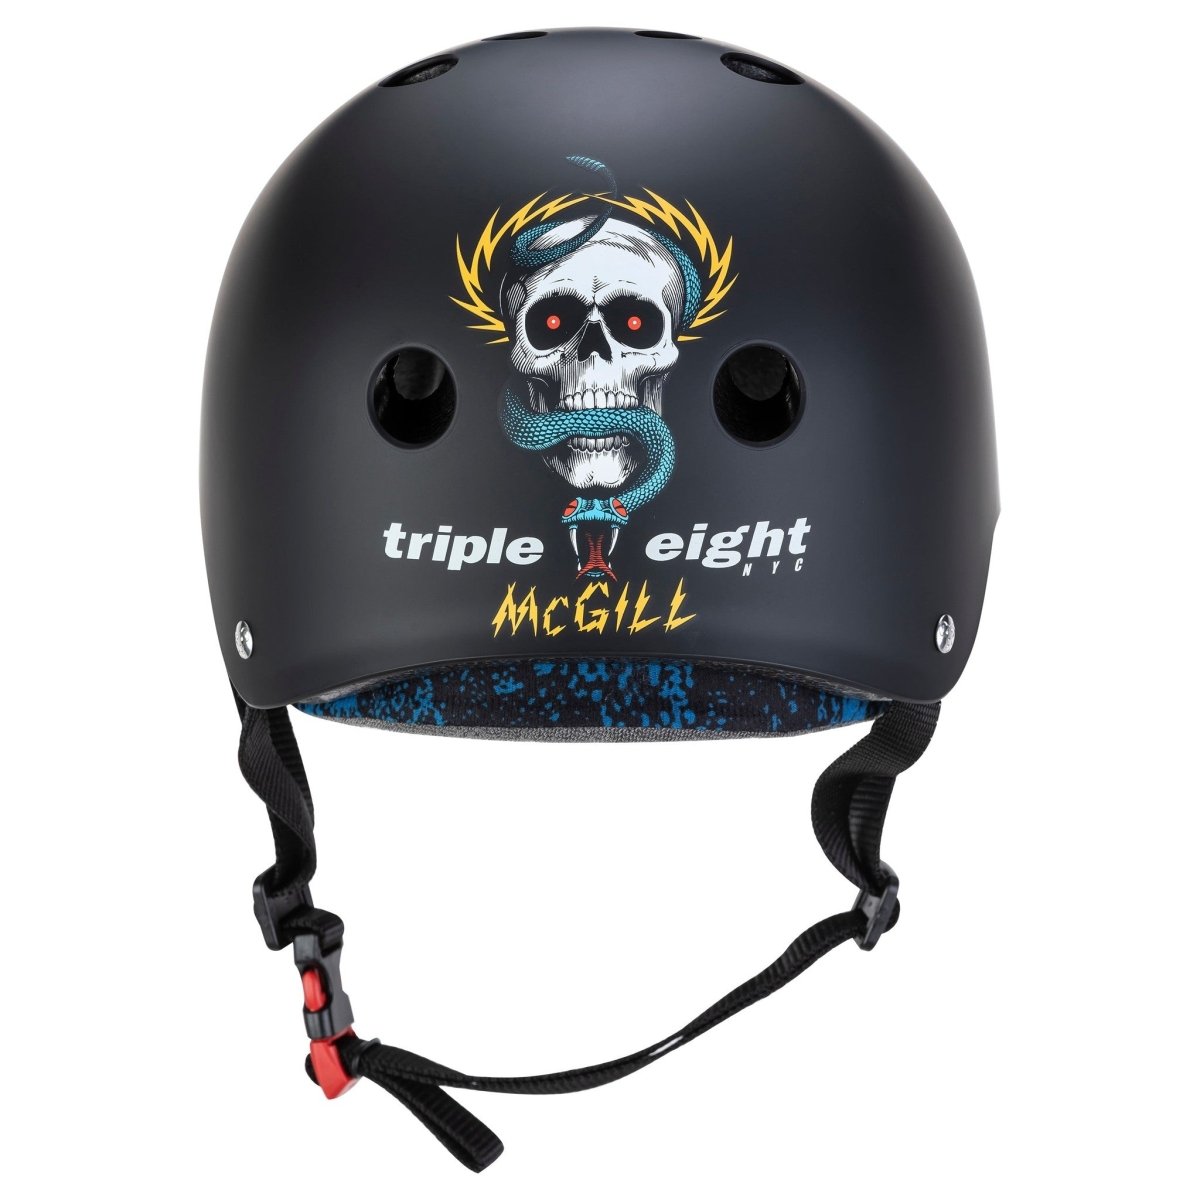 Cert Sweatsaver Helmet - Mike McGill - S/M - Gear - Helmets